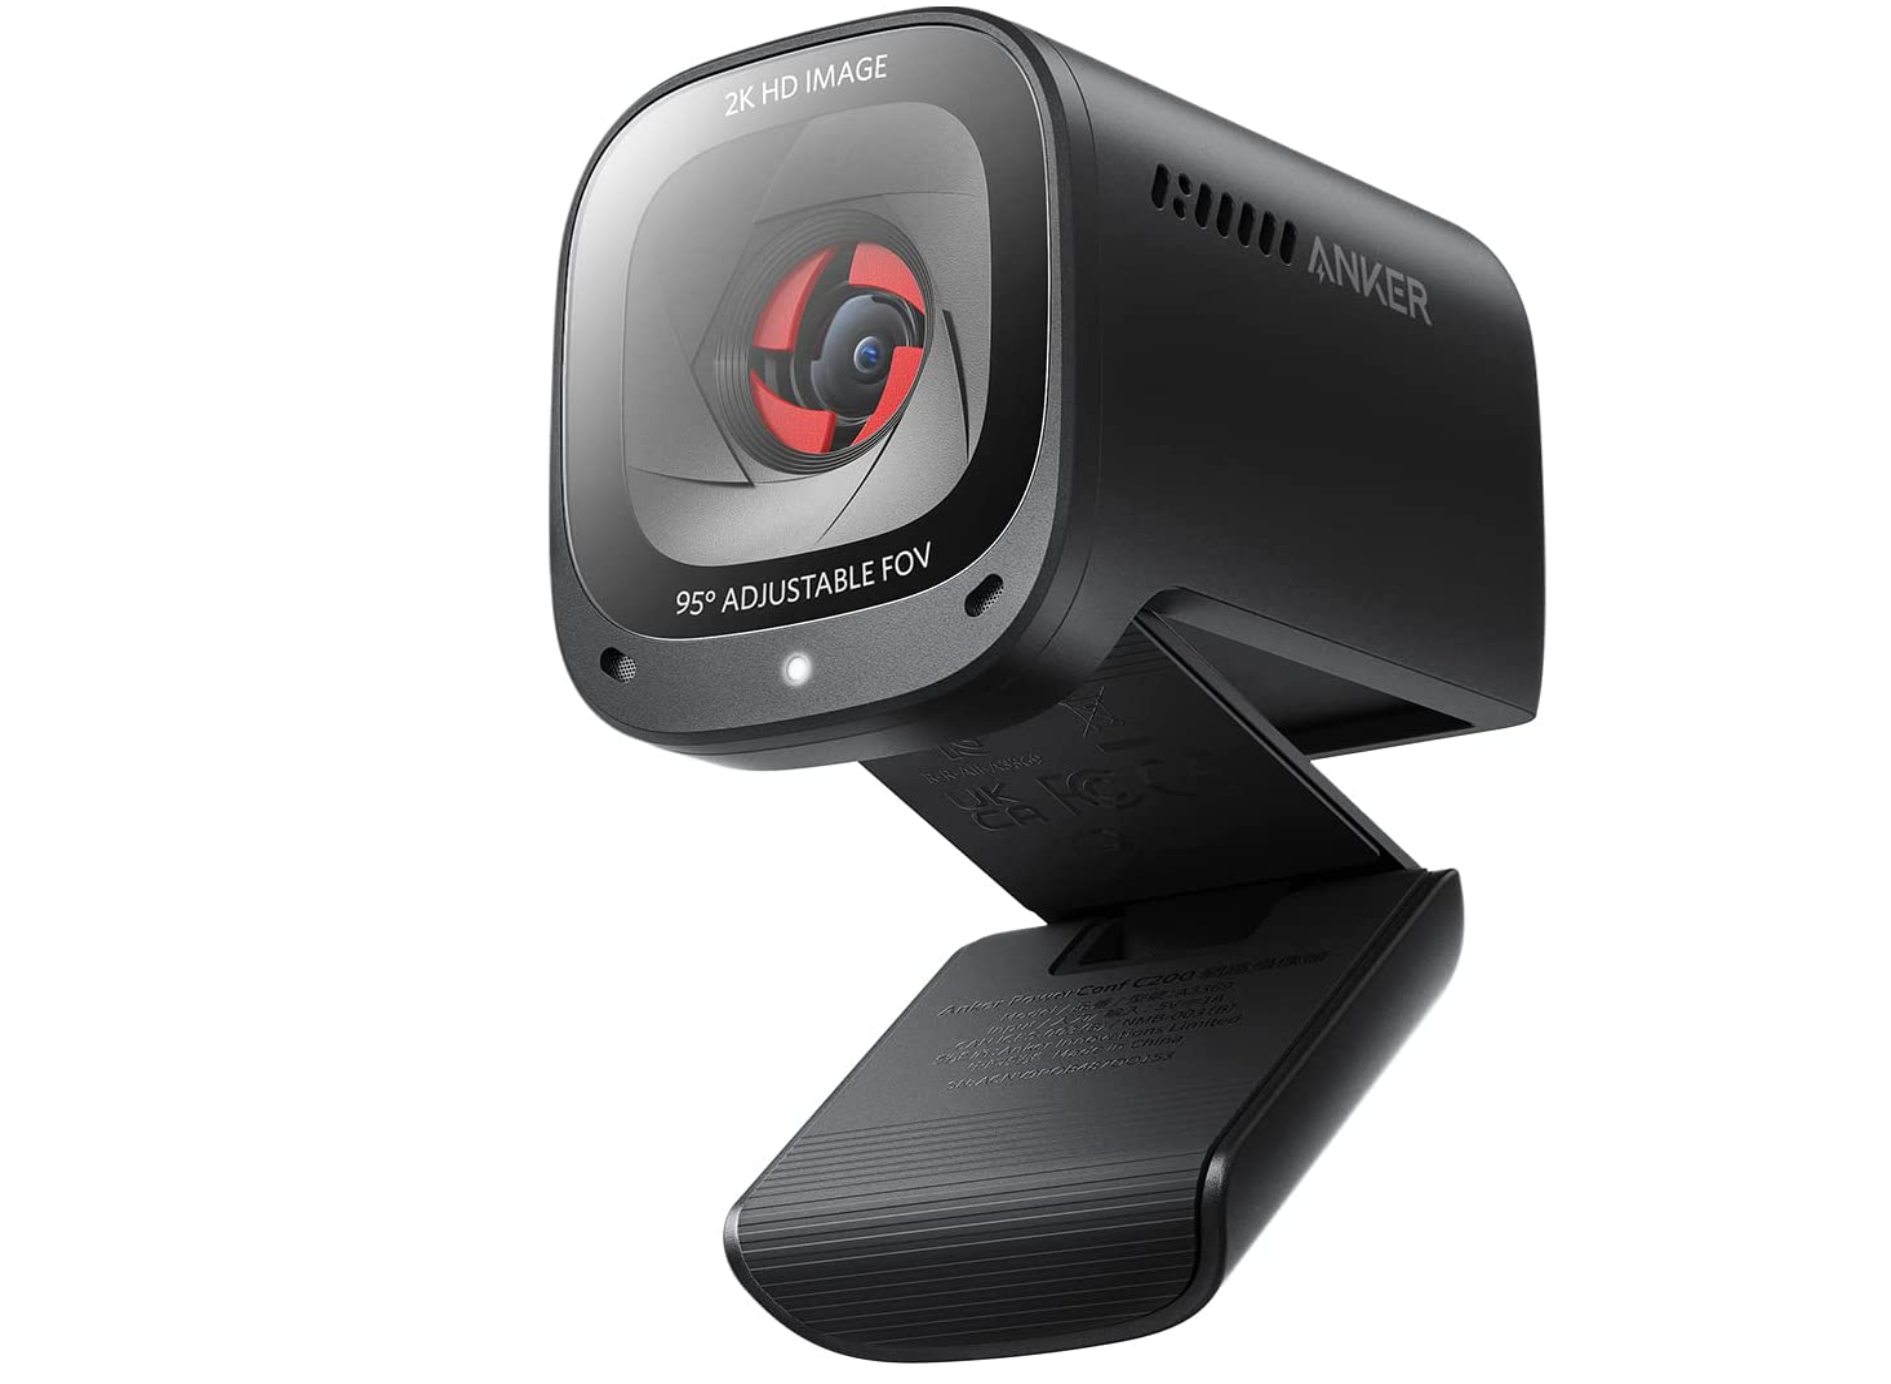 Anker PowerConf C200 - Beste generelle webkamera